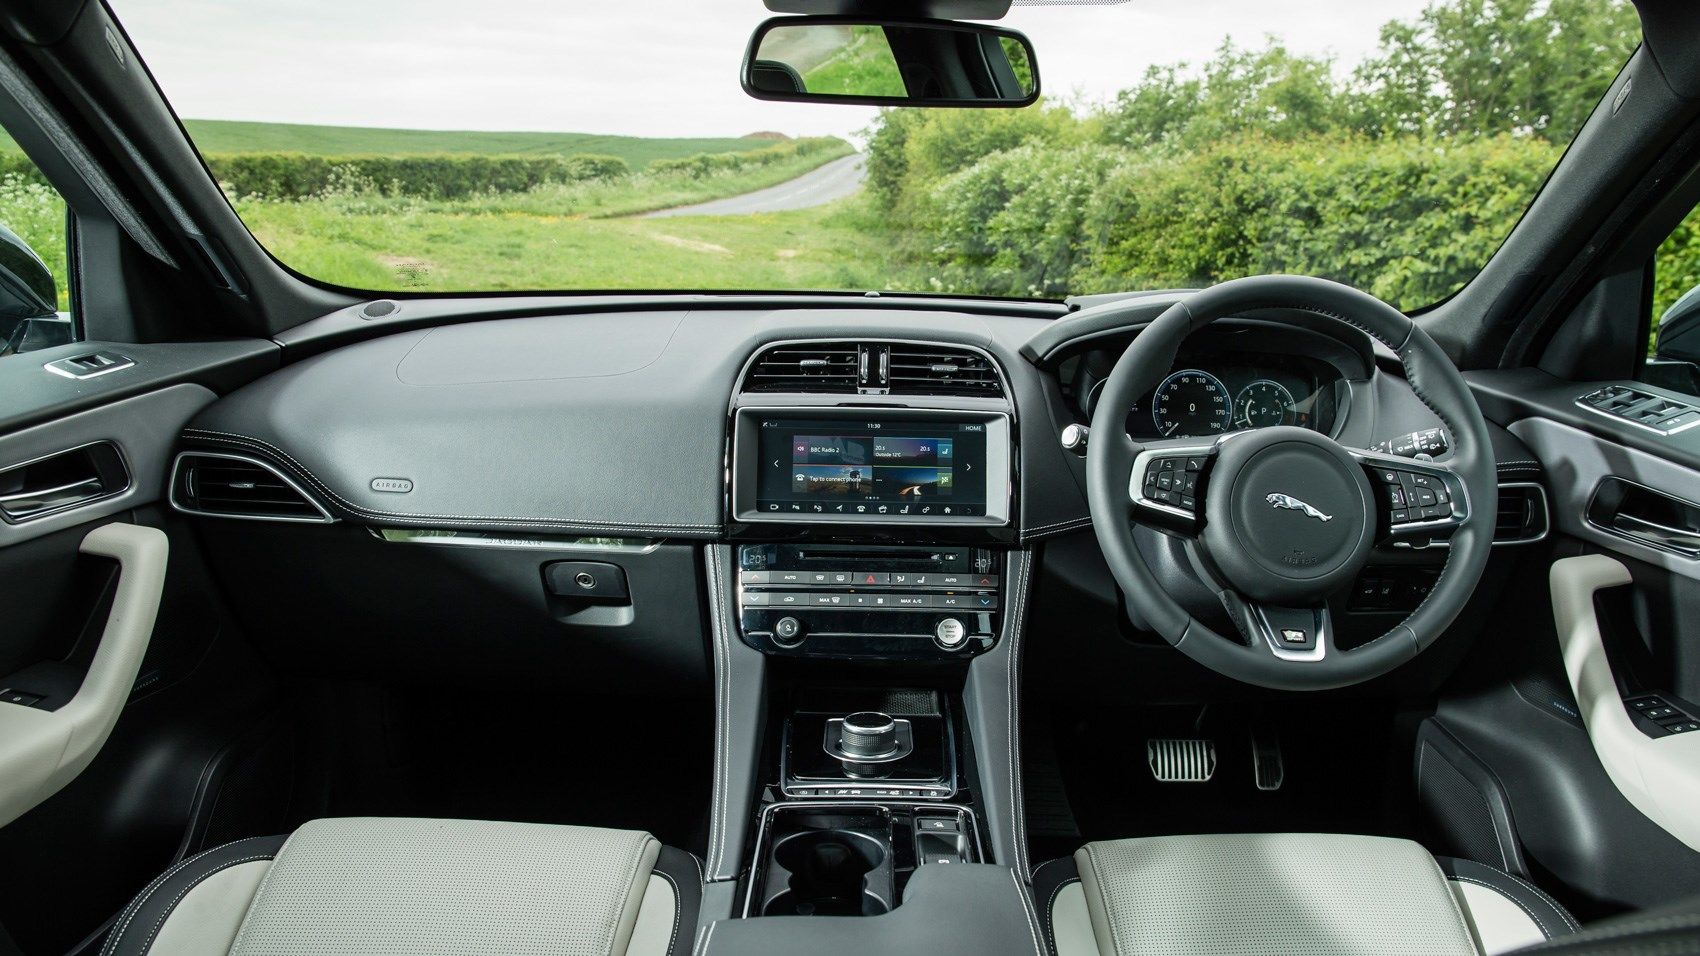 2018 Jaguar F-PACE - interior space of vehicle